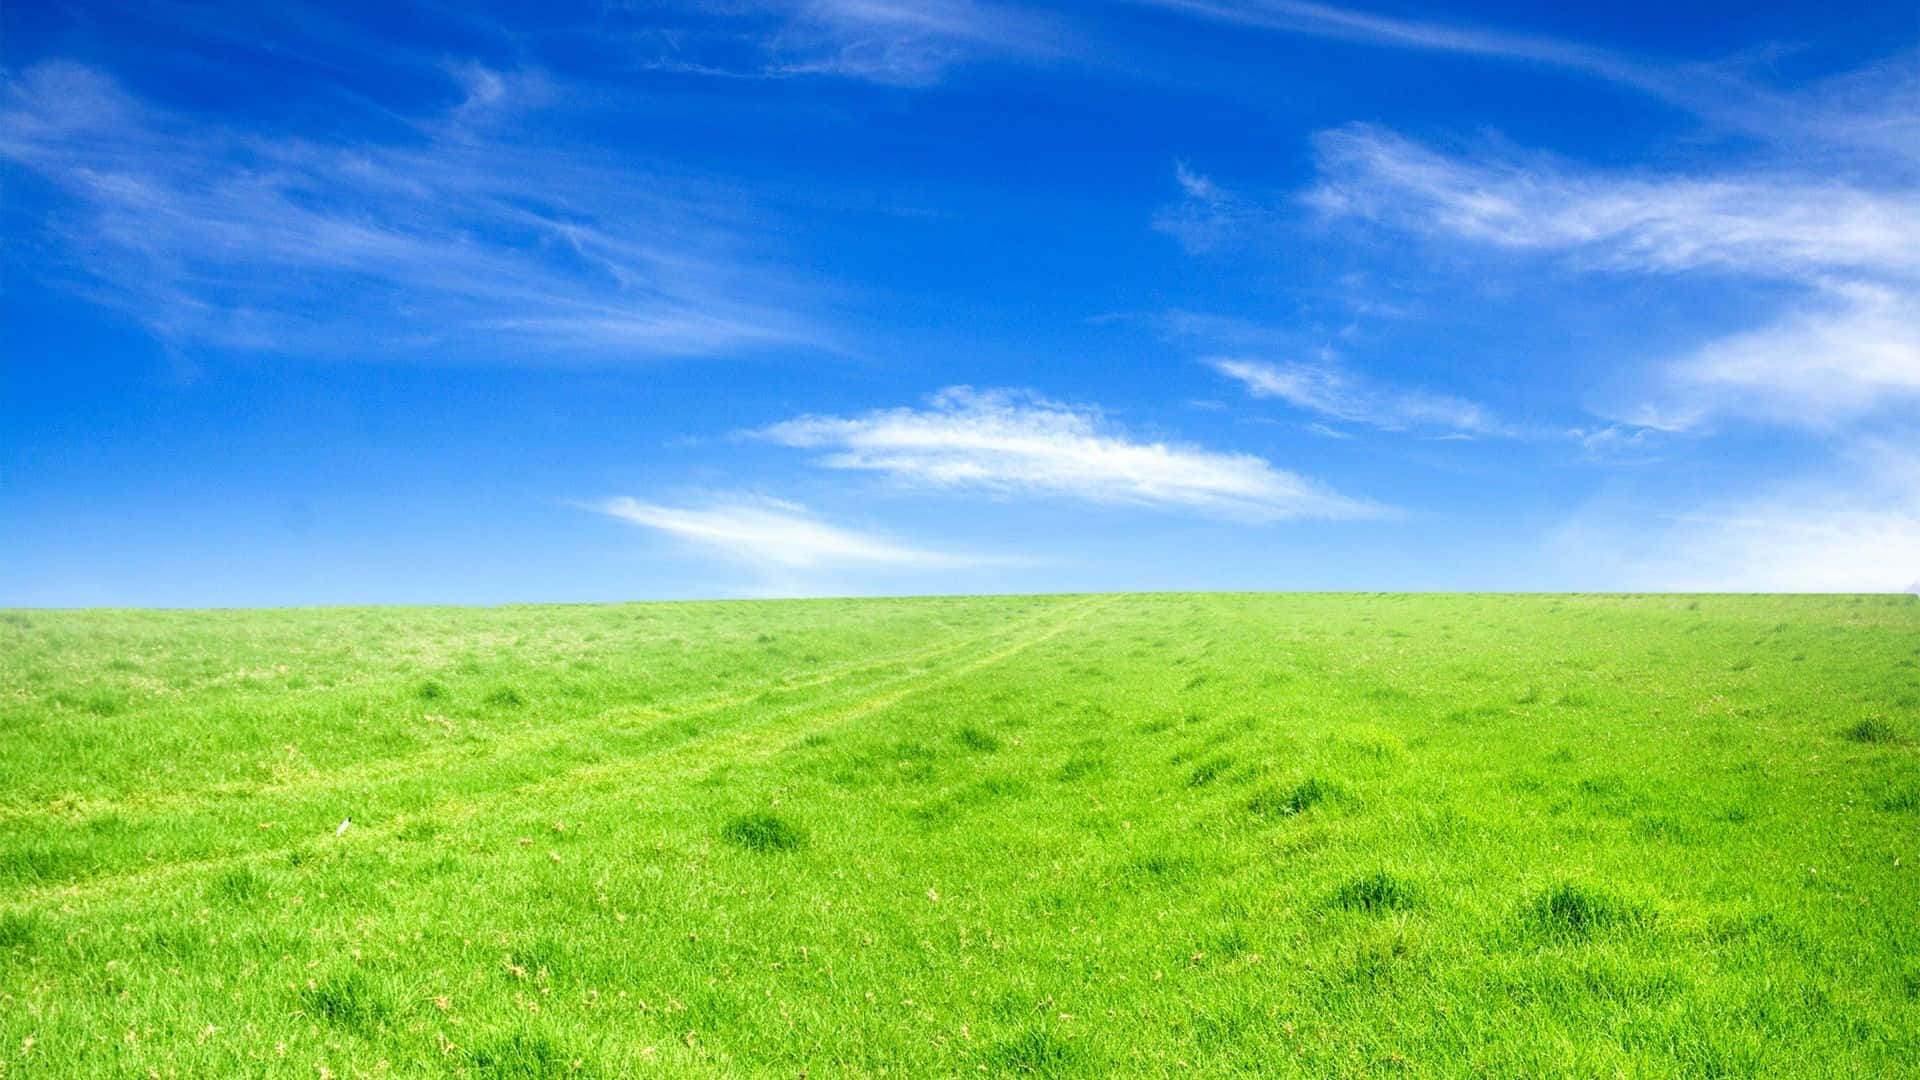 Plain Grass And Blue Sky Background